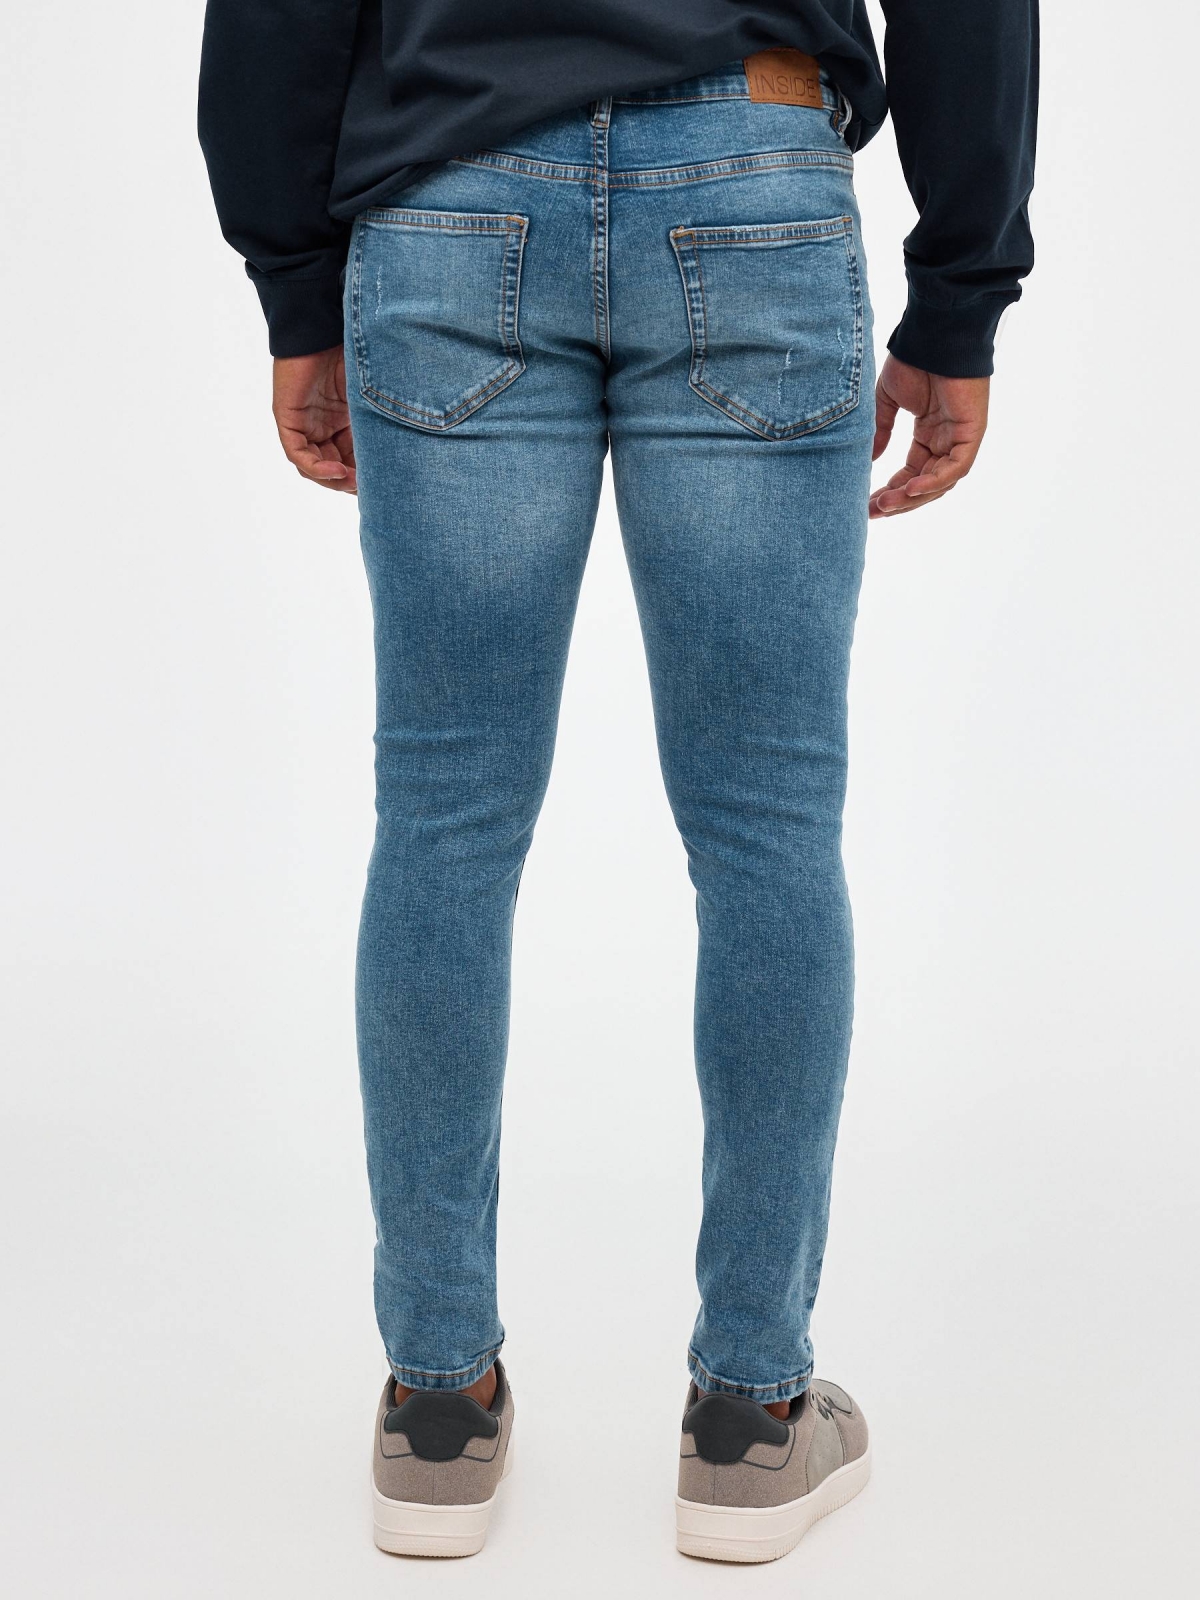 Jeans skinny bajos rotos azul vista media trasera